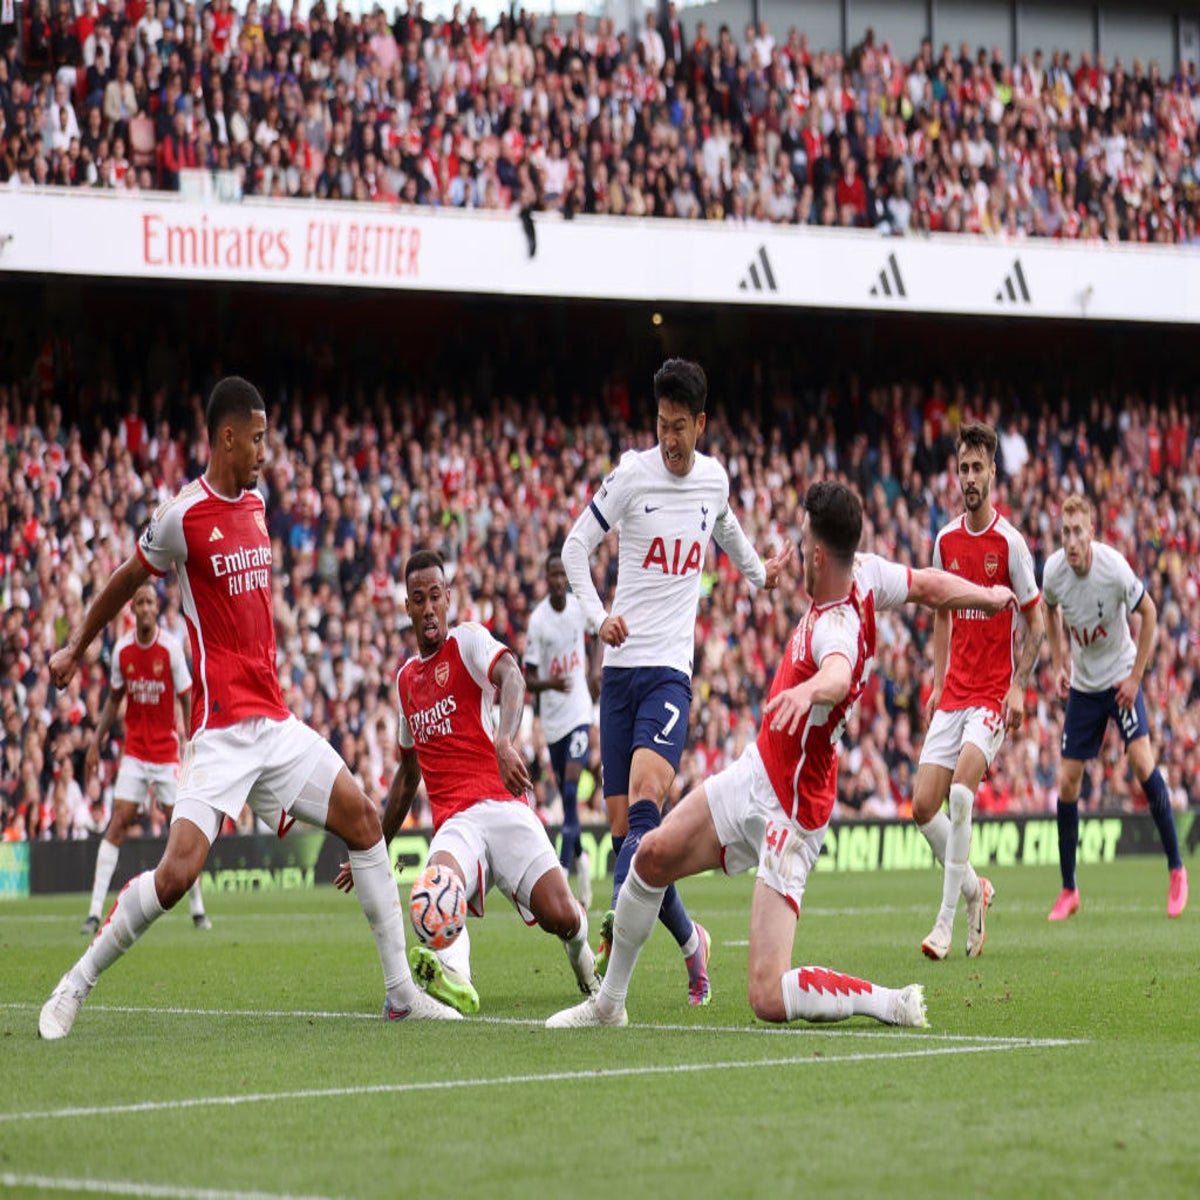 Tottenham vs Arsenal live: Women's fixture underway after Son nets winner  in men's match 